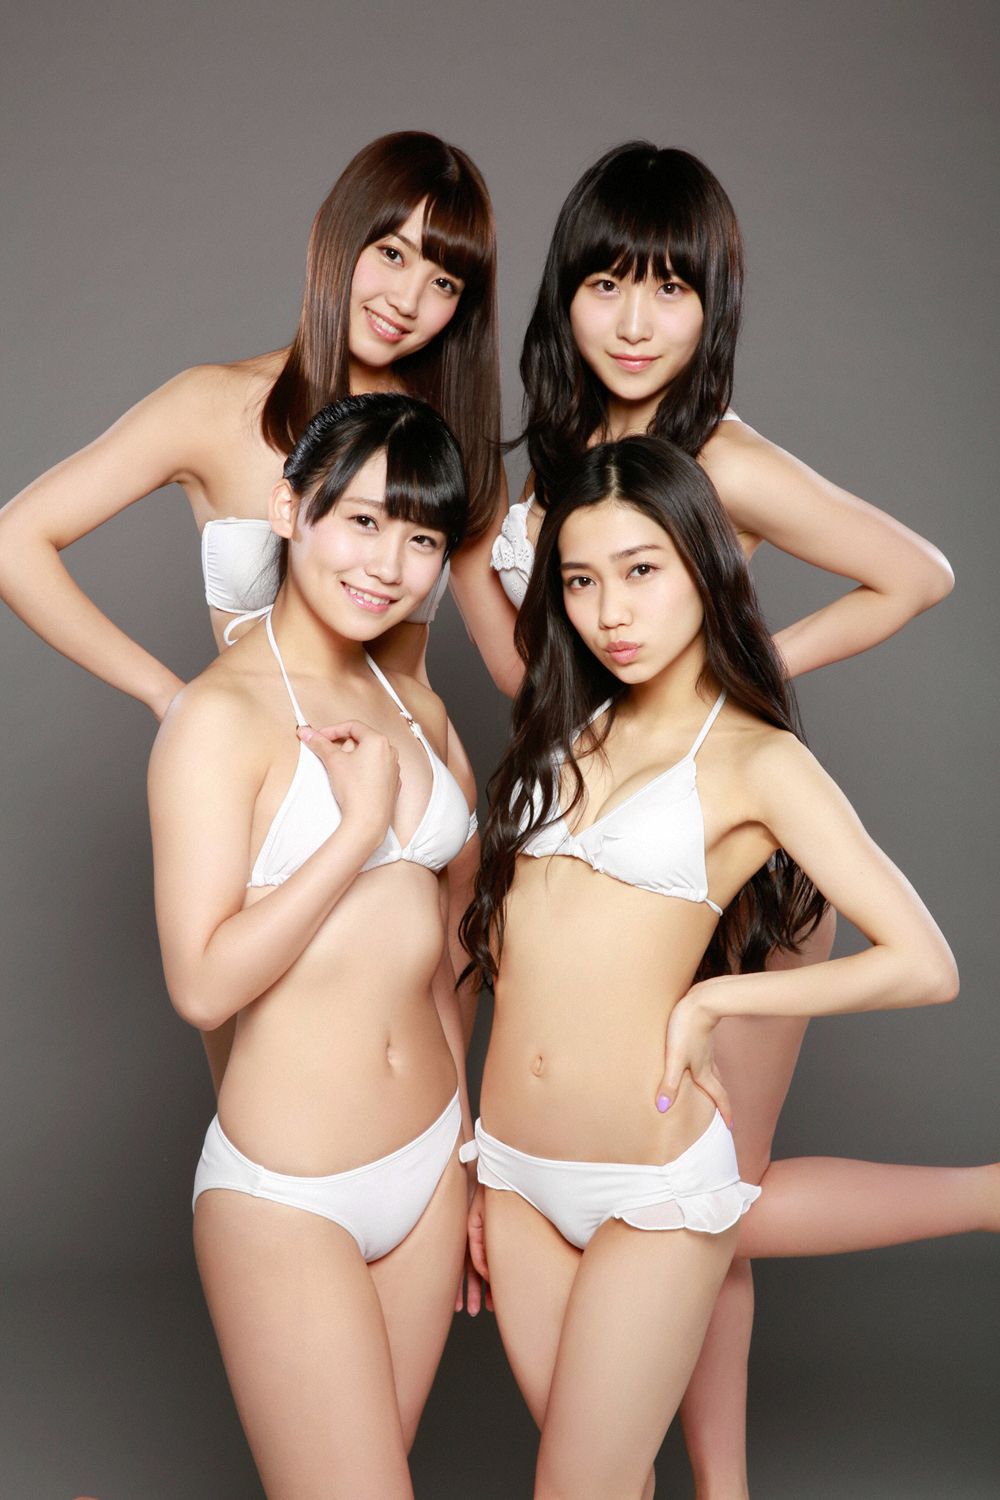 [YS Web] Vol.657 AKB48 小嶋真子,加藤玲奈,田野優花,高橋朱里 - 18歳のAKB48 [50P]